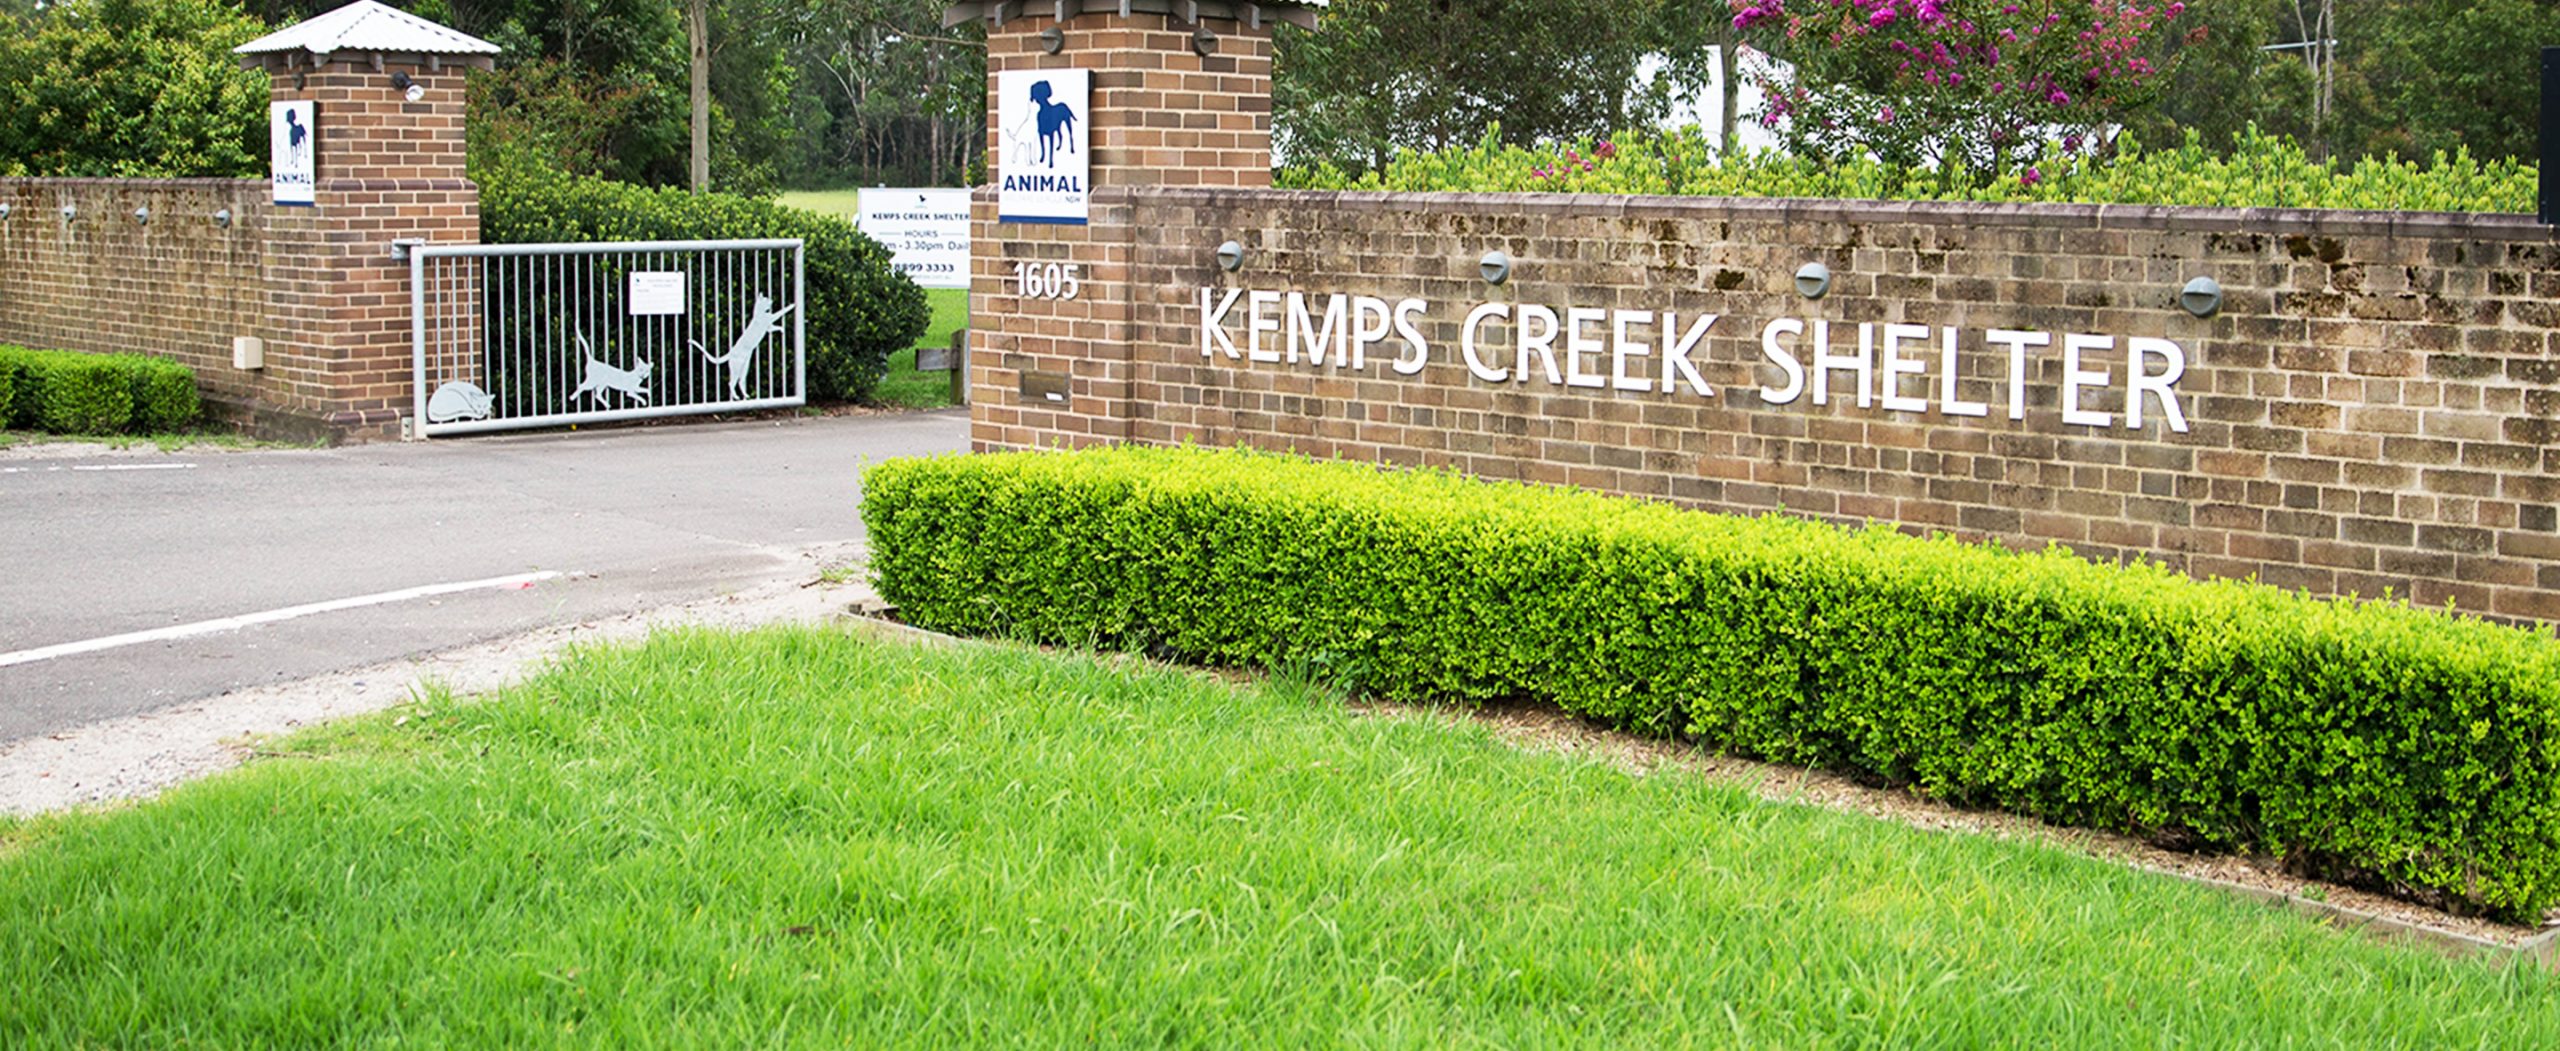 Kemps Creek shelter entrance